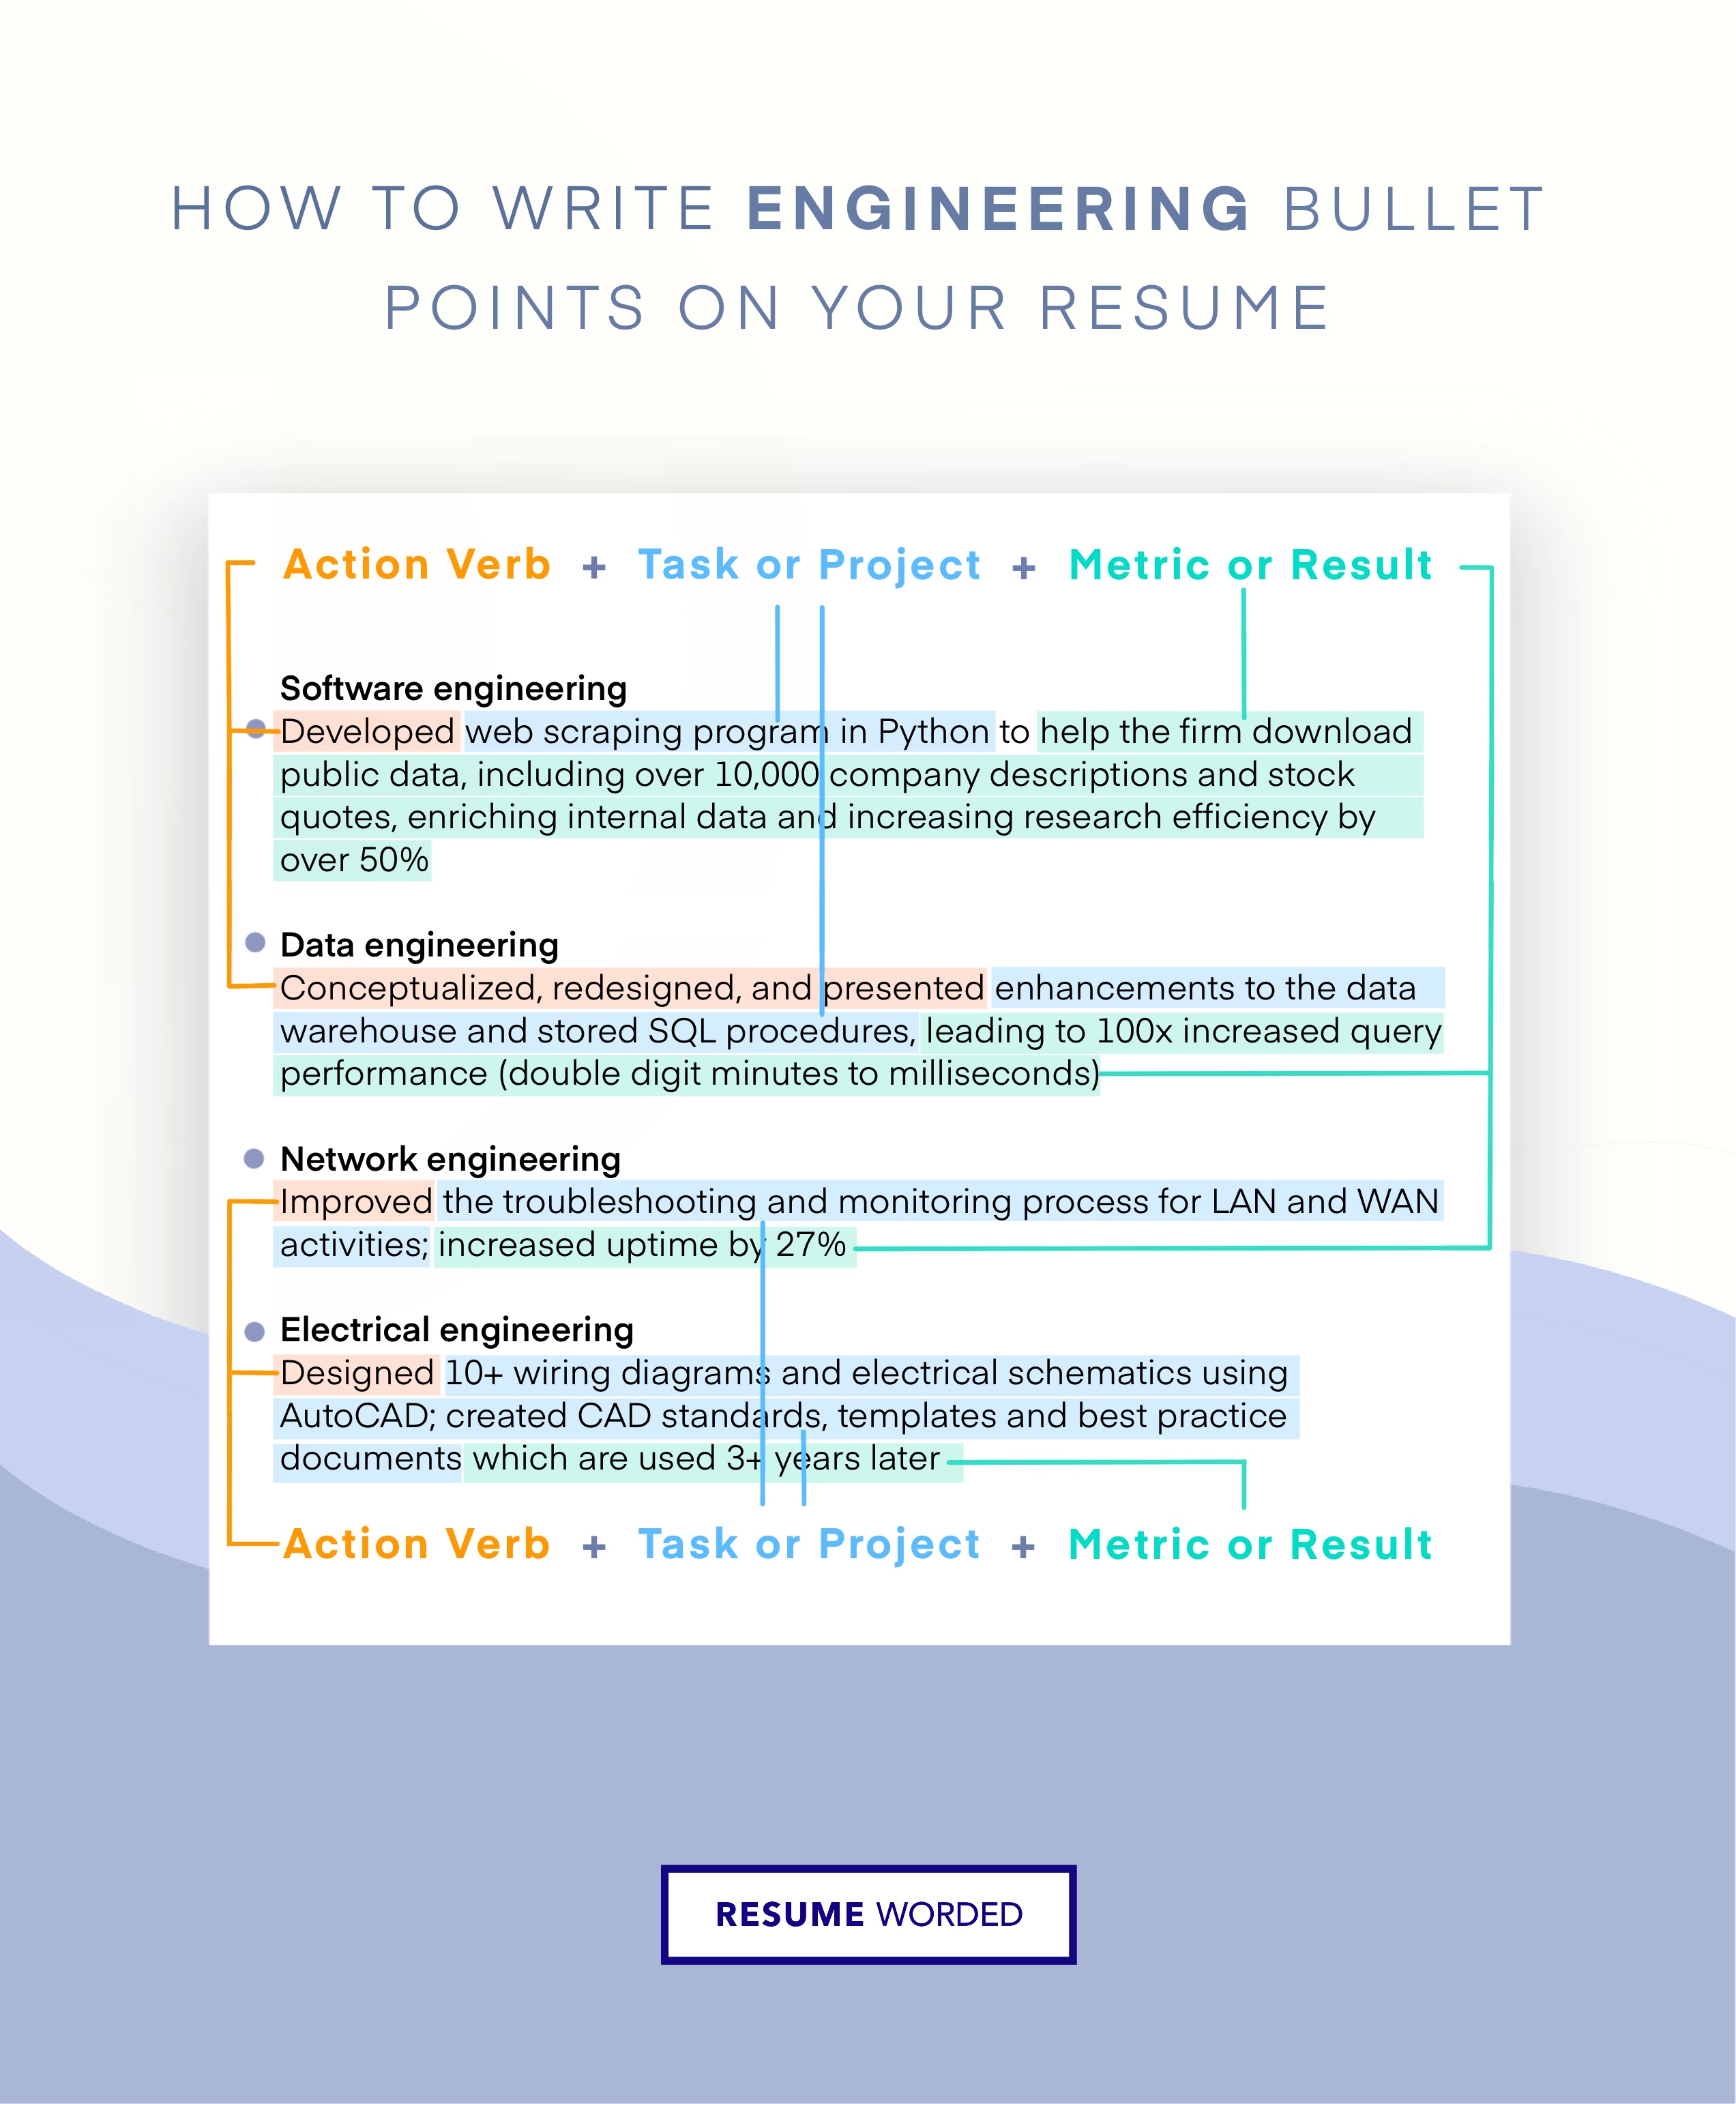 Focuses on hard skills relevant to UX engineering - UX Engineer (Usability Engineer) Resume